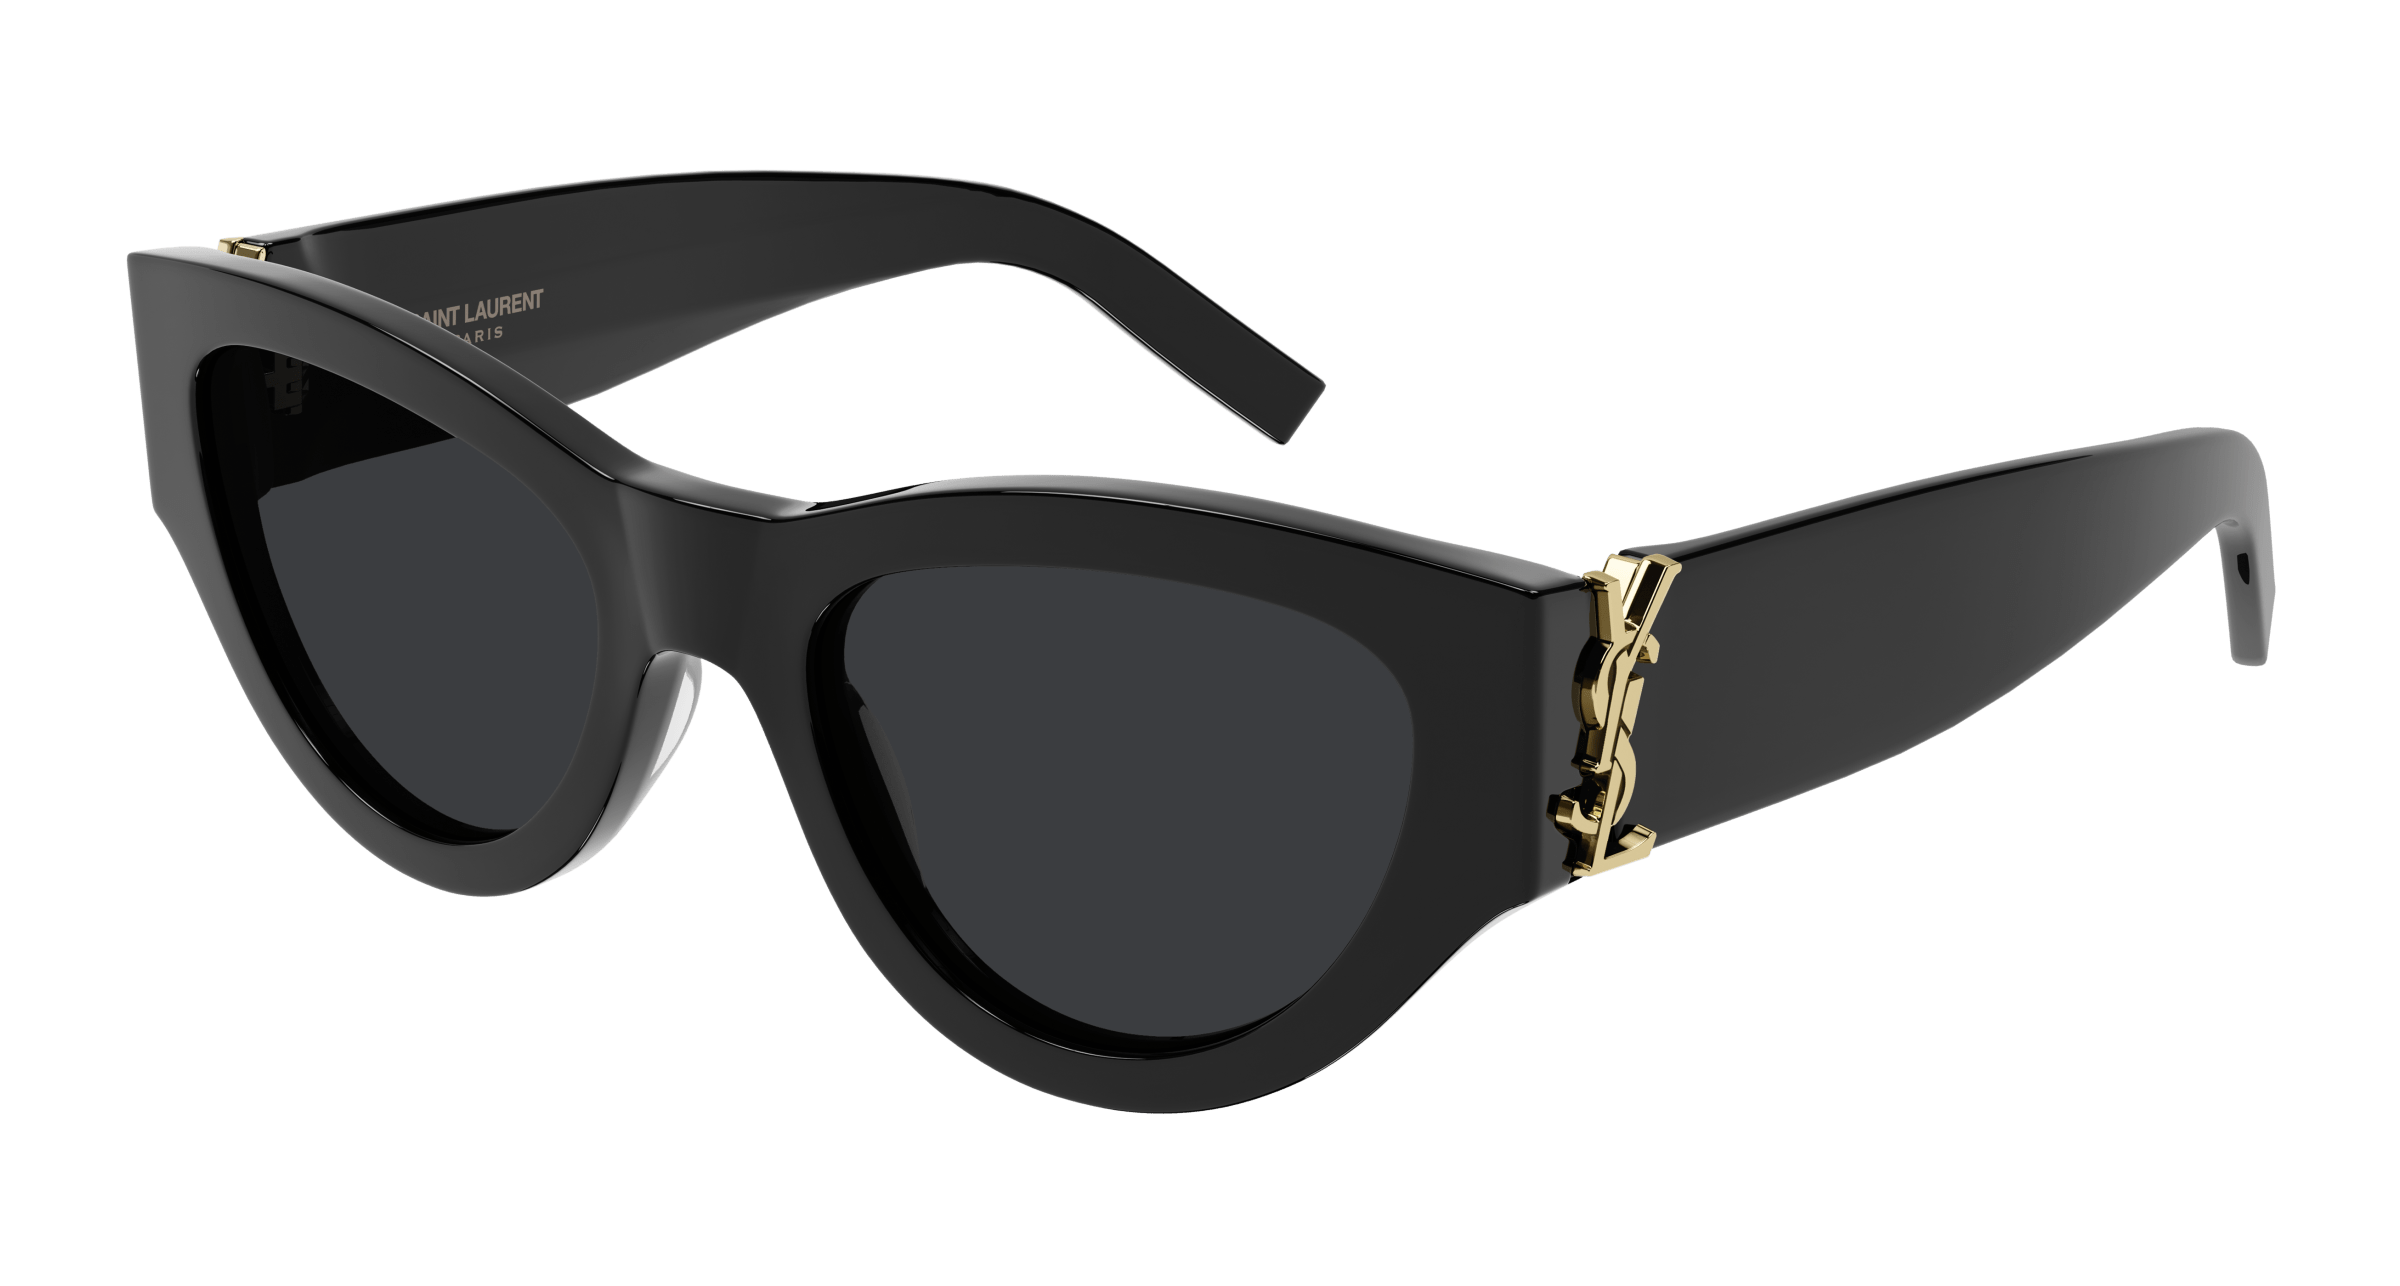 Saint Laurent SL 276 Mica 53 Grey & Black Shiny Sunglasses